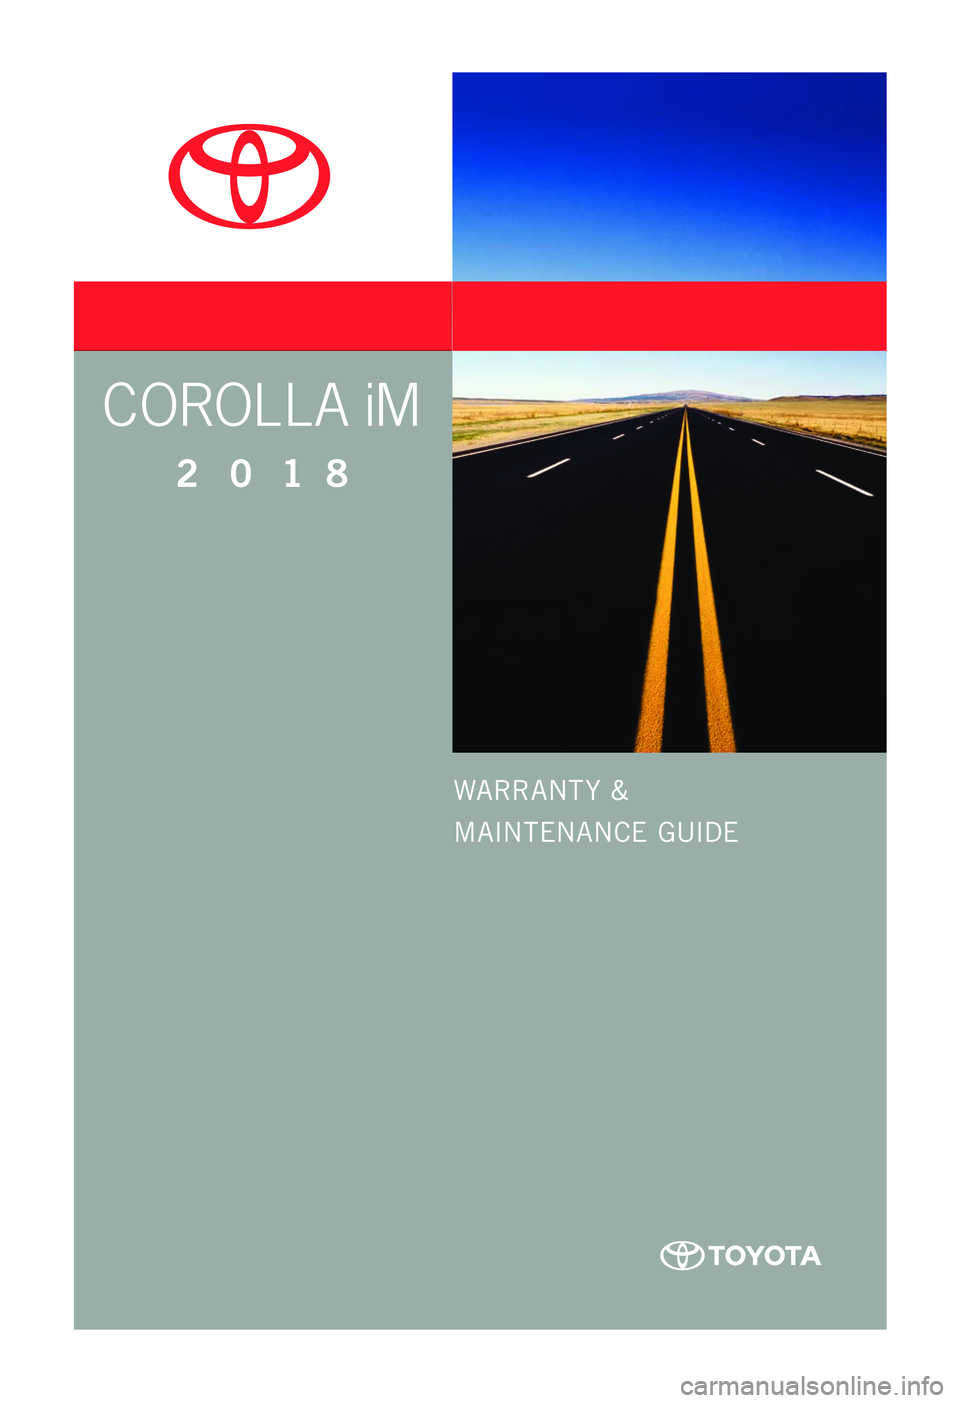 TOYOTA COROLLA iM 2018  Warranties & Maintenance Guides (in English) WARRANT Y &
MAINTENANCE GUIDE
COROLLA iM
2 0 1 8     
Corolla_IM_COVER_S\nPLIT.in\f\f   37\b12\b17   2:52 PM 